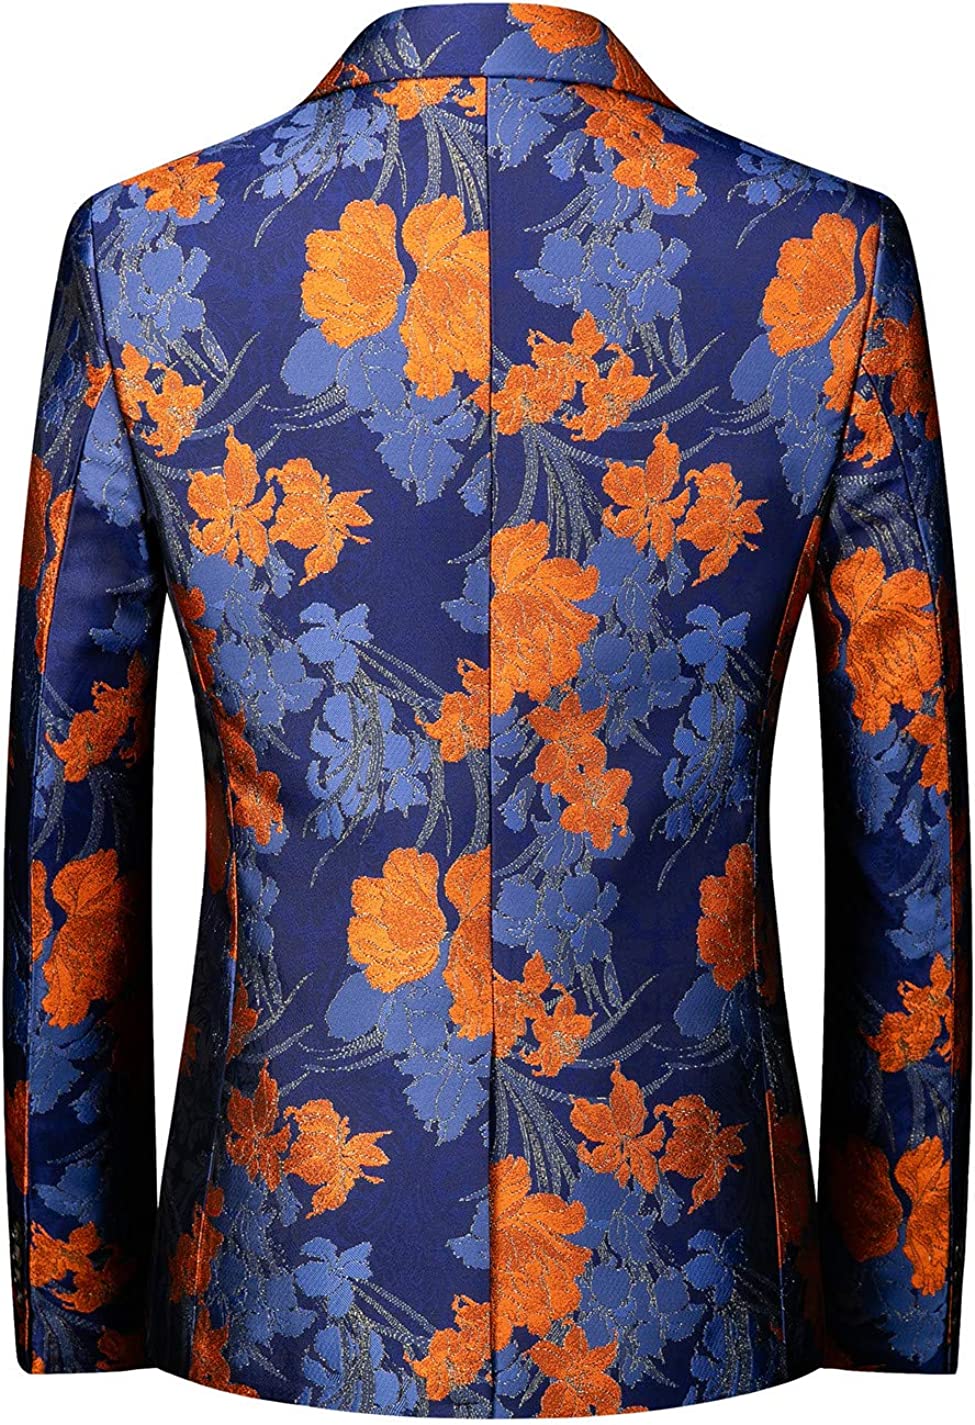 Men's Blue Orange Slim-Fitting Fashionable Flat-Collar Party Blazer Jacquard Flower Pattern - ENE TRENDS -custom designed-personalized- tailored-suits-near me-shirt-clothes-dress-amazon-top-luxury-fashion-men-women-kids-streetwear-IG-best